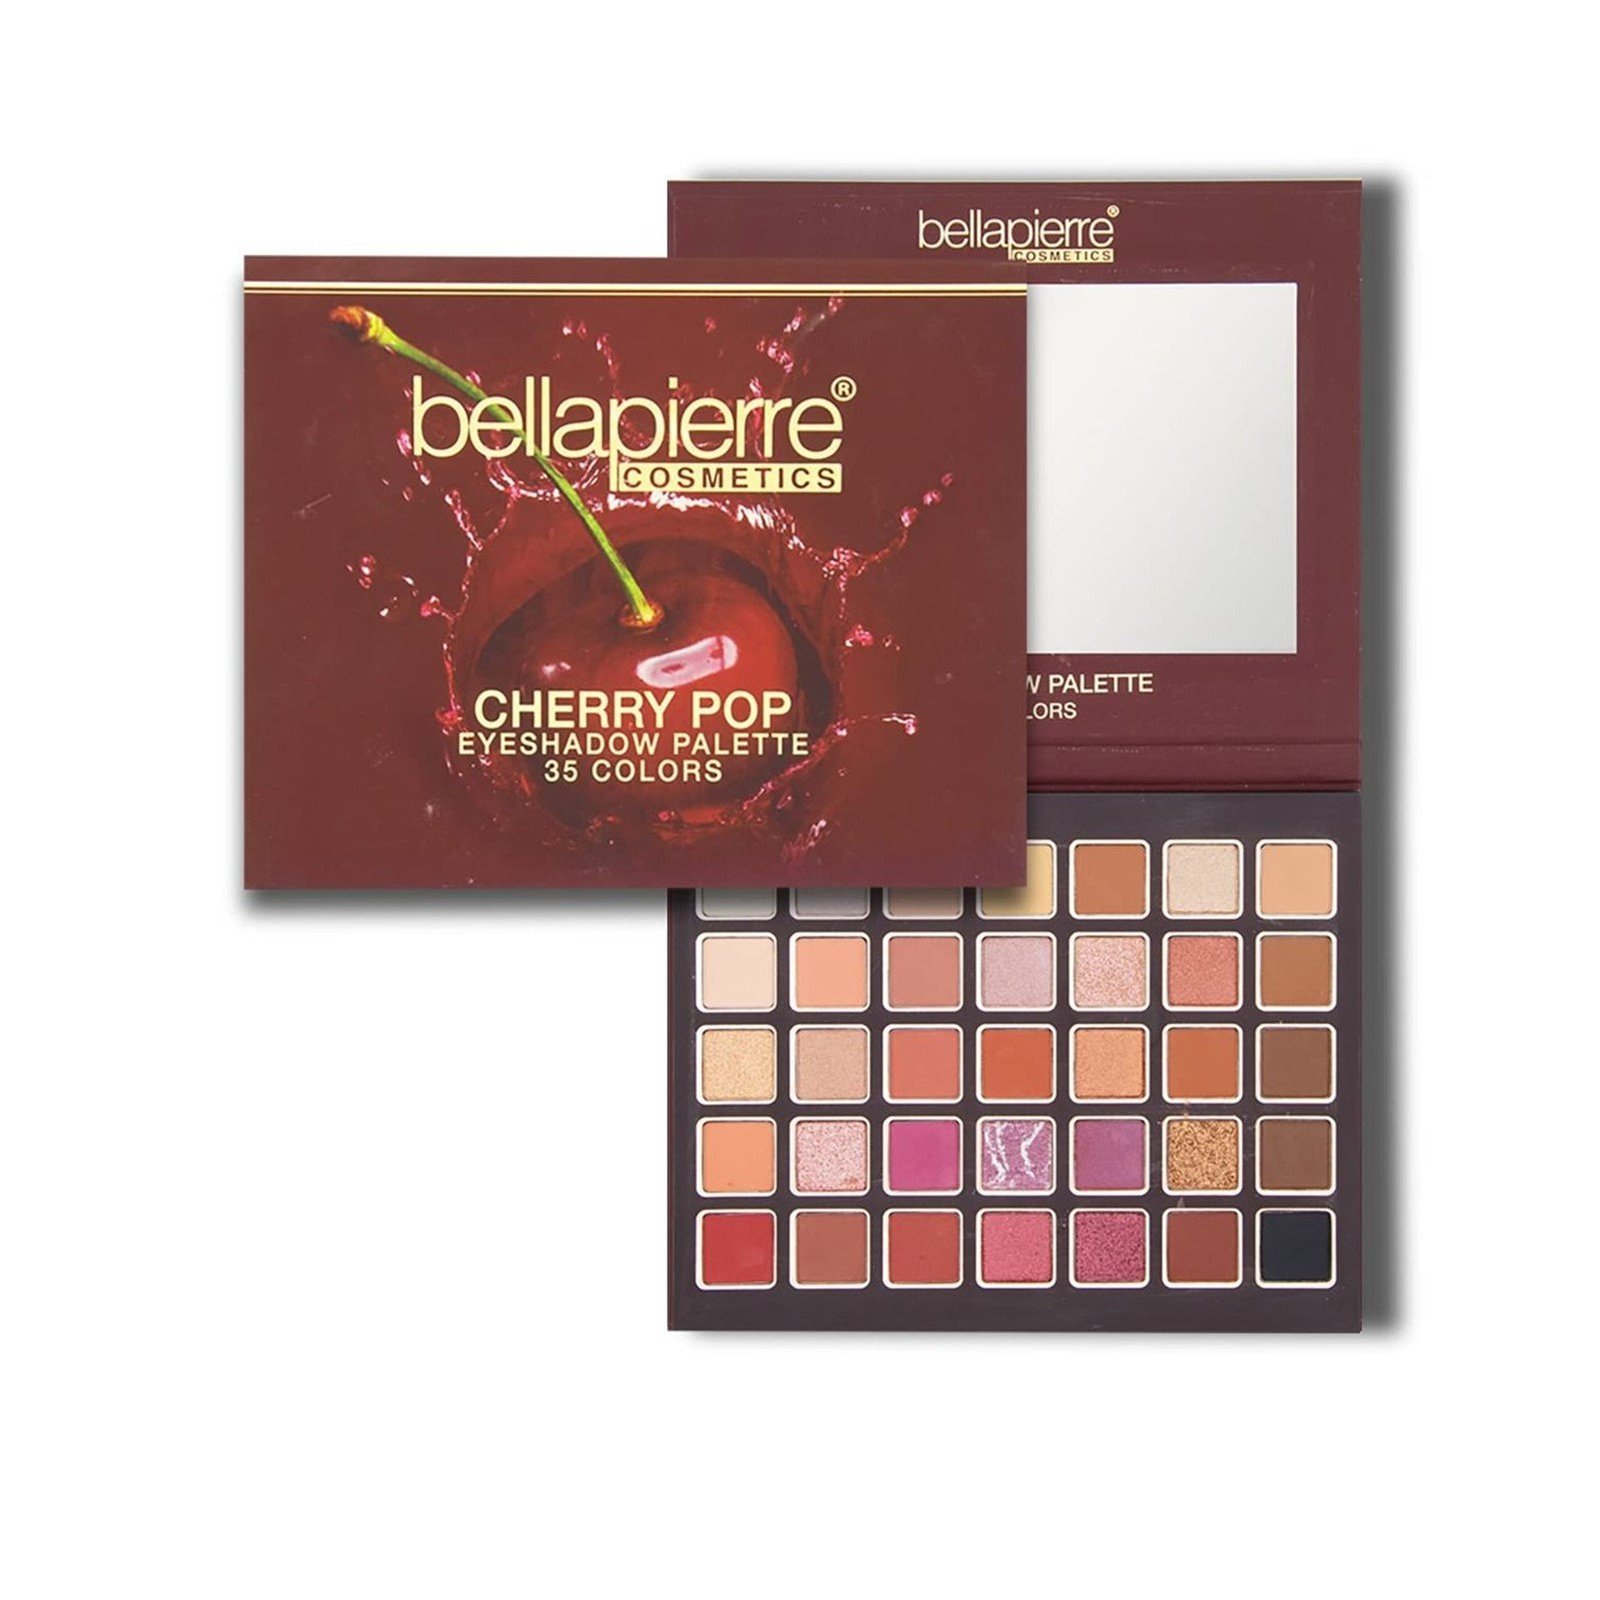 Bellapierre Cosmetics Eyeshadow Palette 35 Colors Cherry Pop